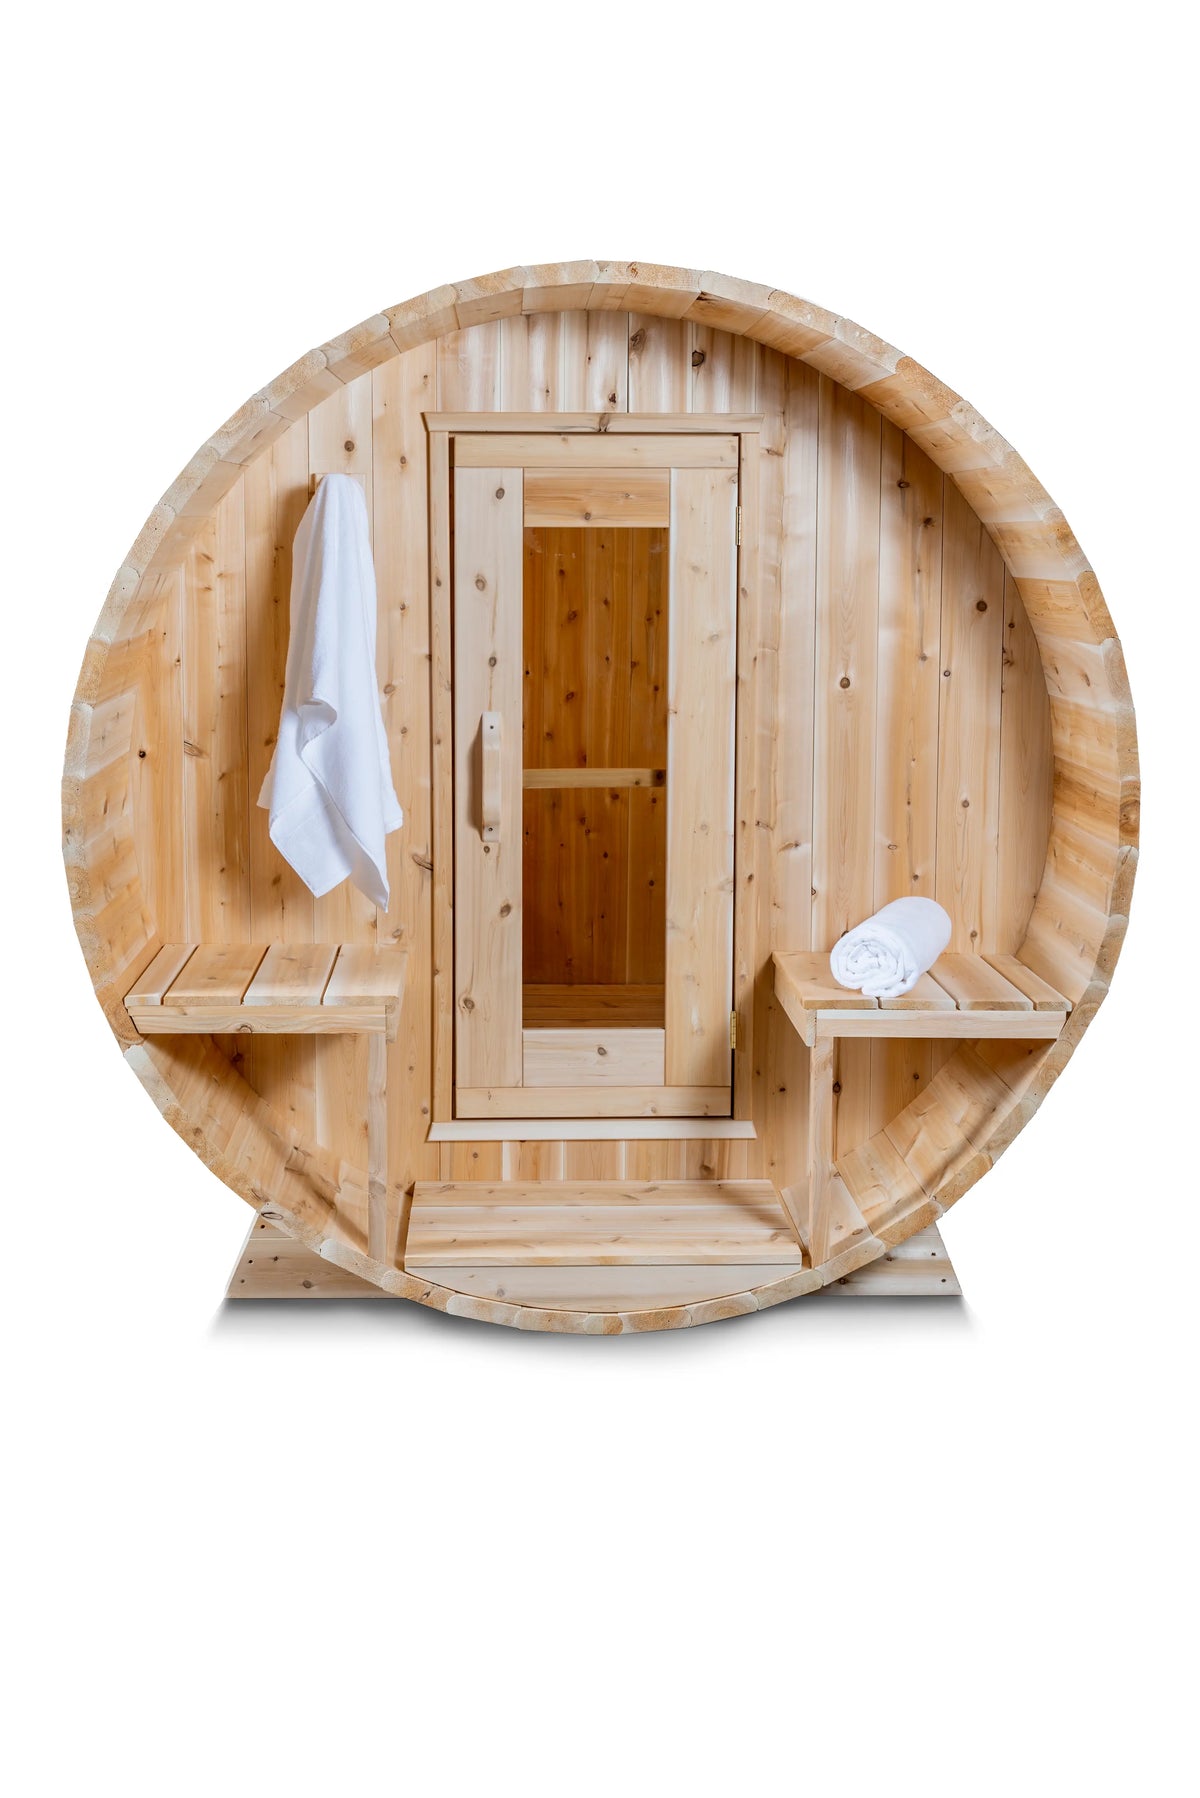 Dundalk LeisureCraft Canadian Timber Serenity Sauna 4 Person Barrel Sauna CTC2245W